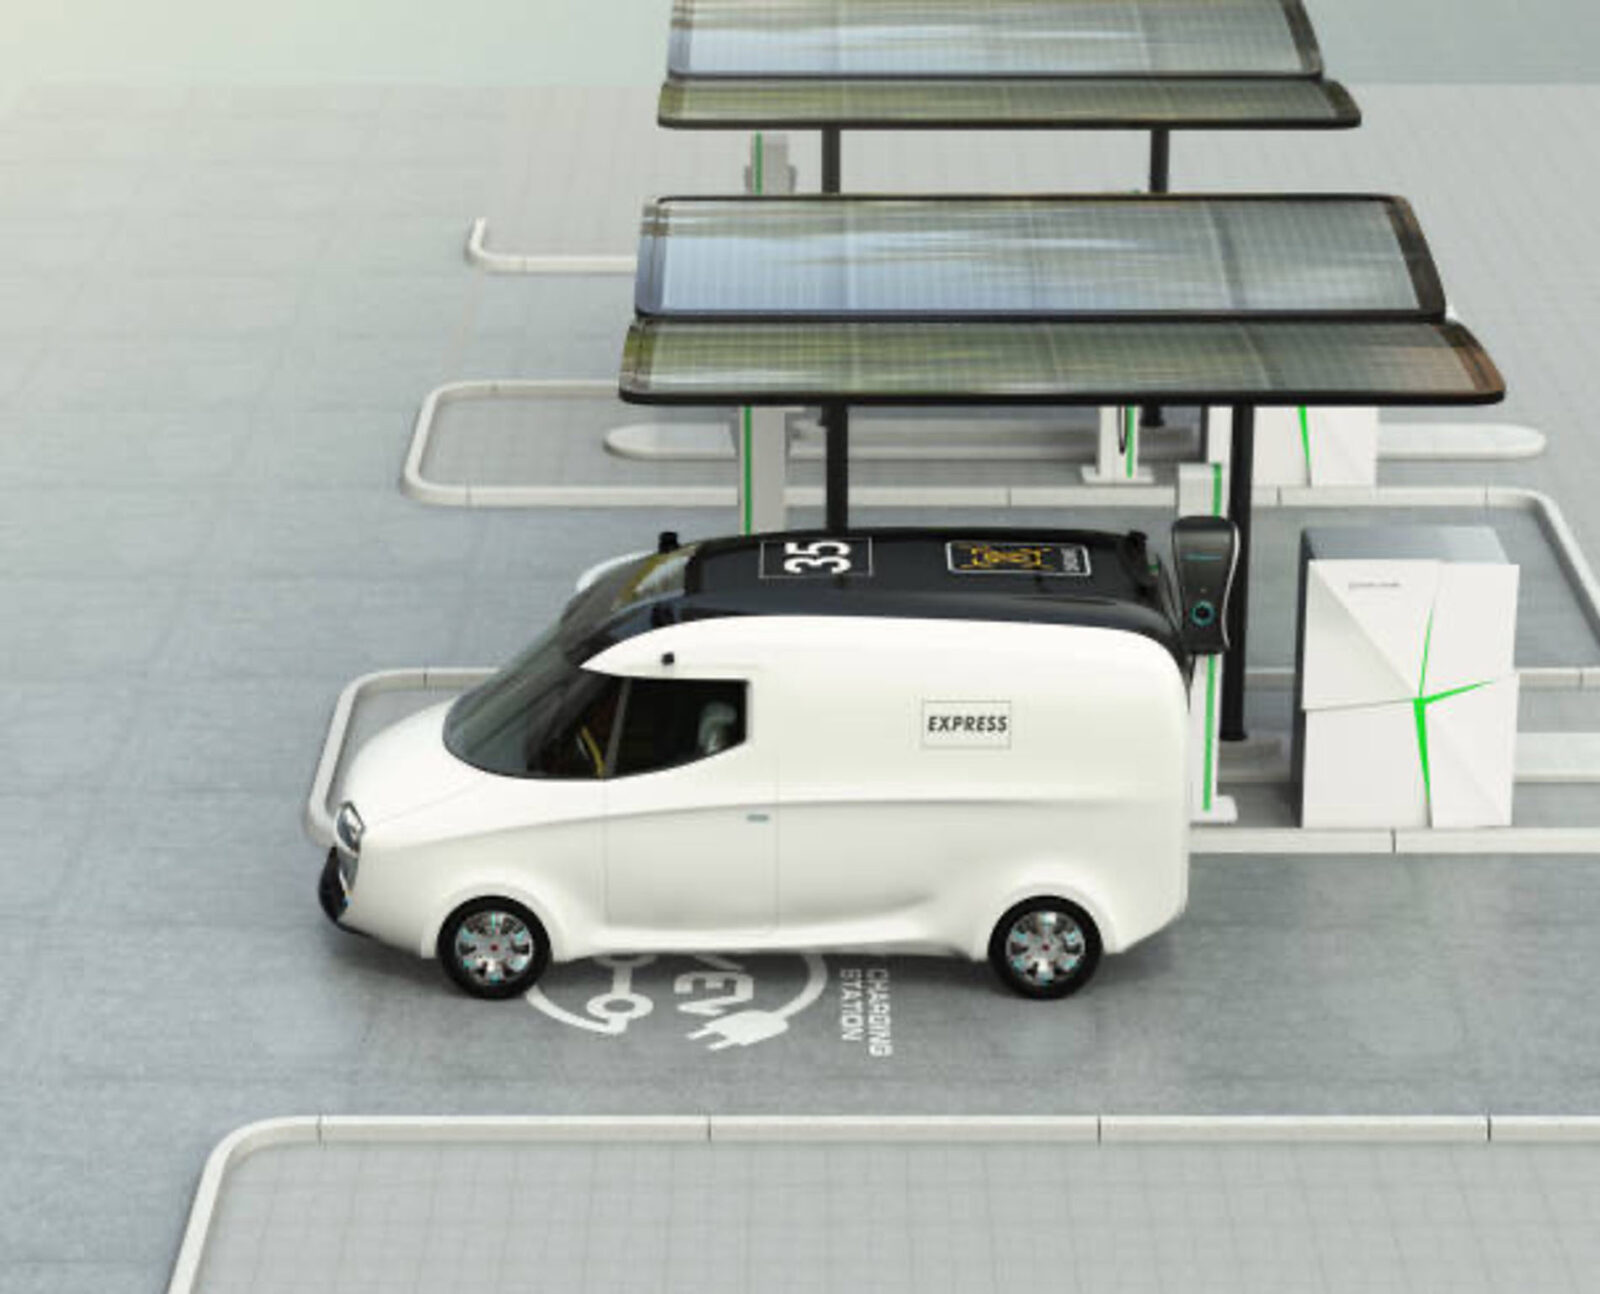 Electric Van sits in parking lot